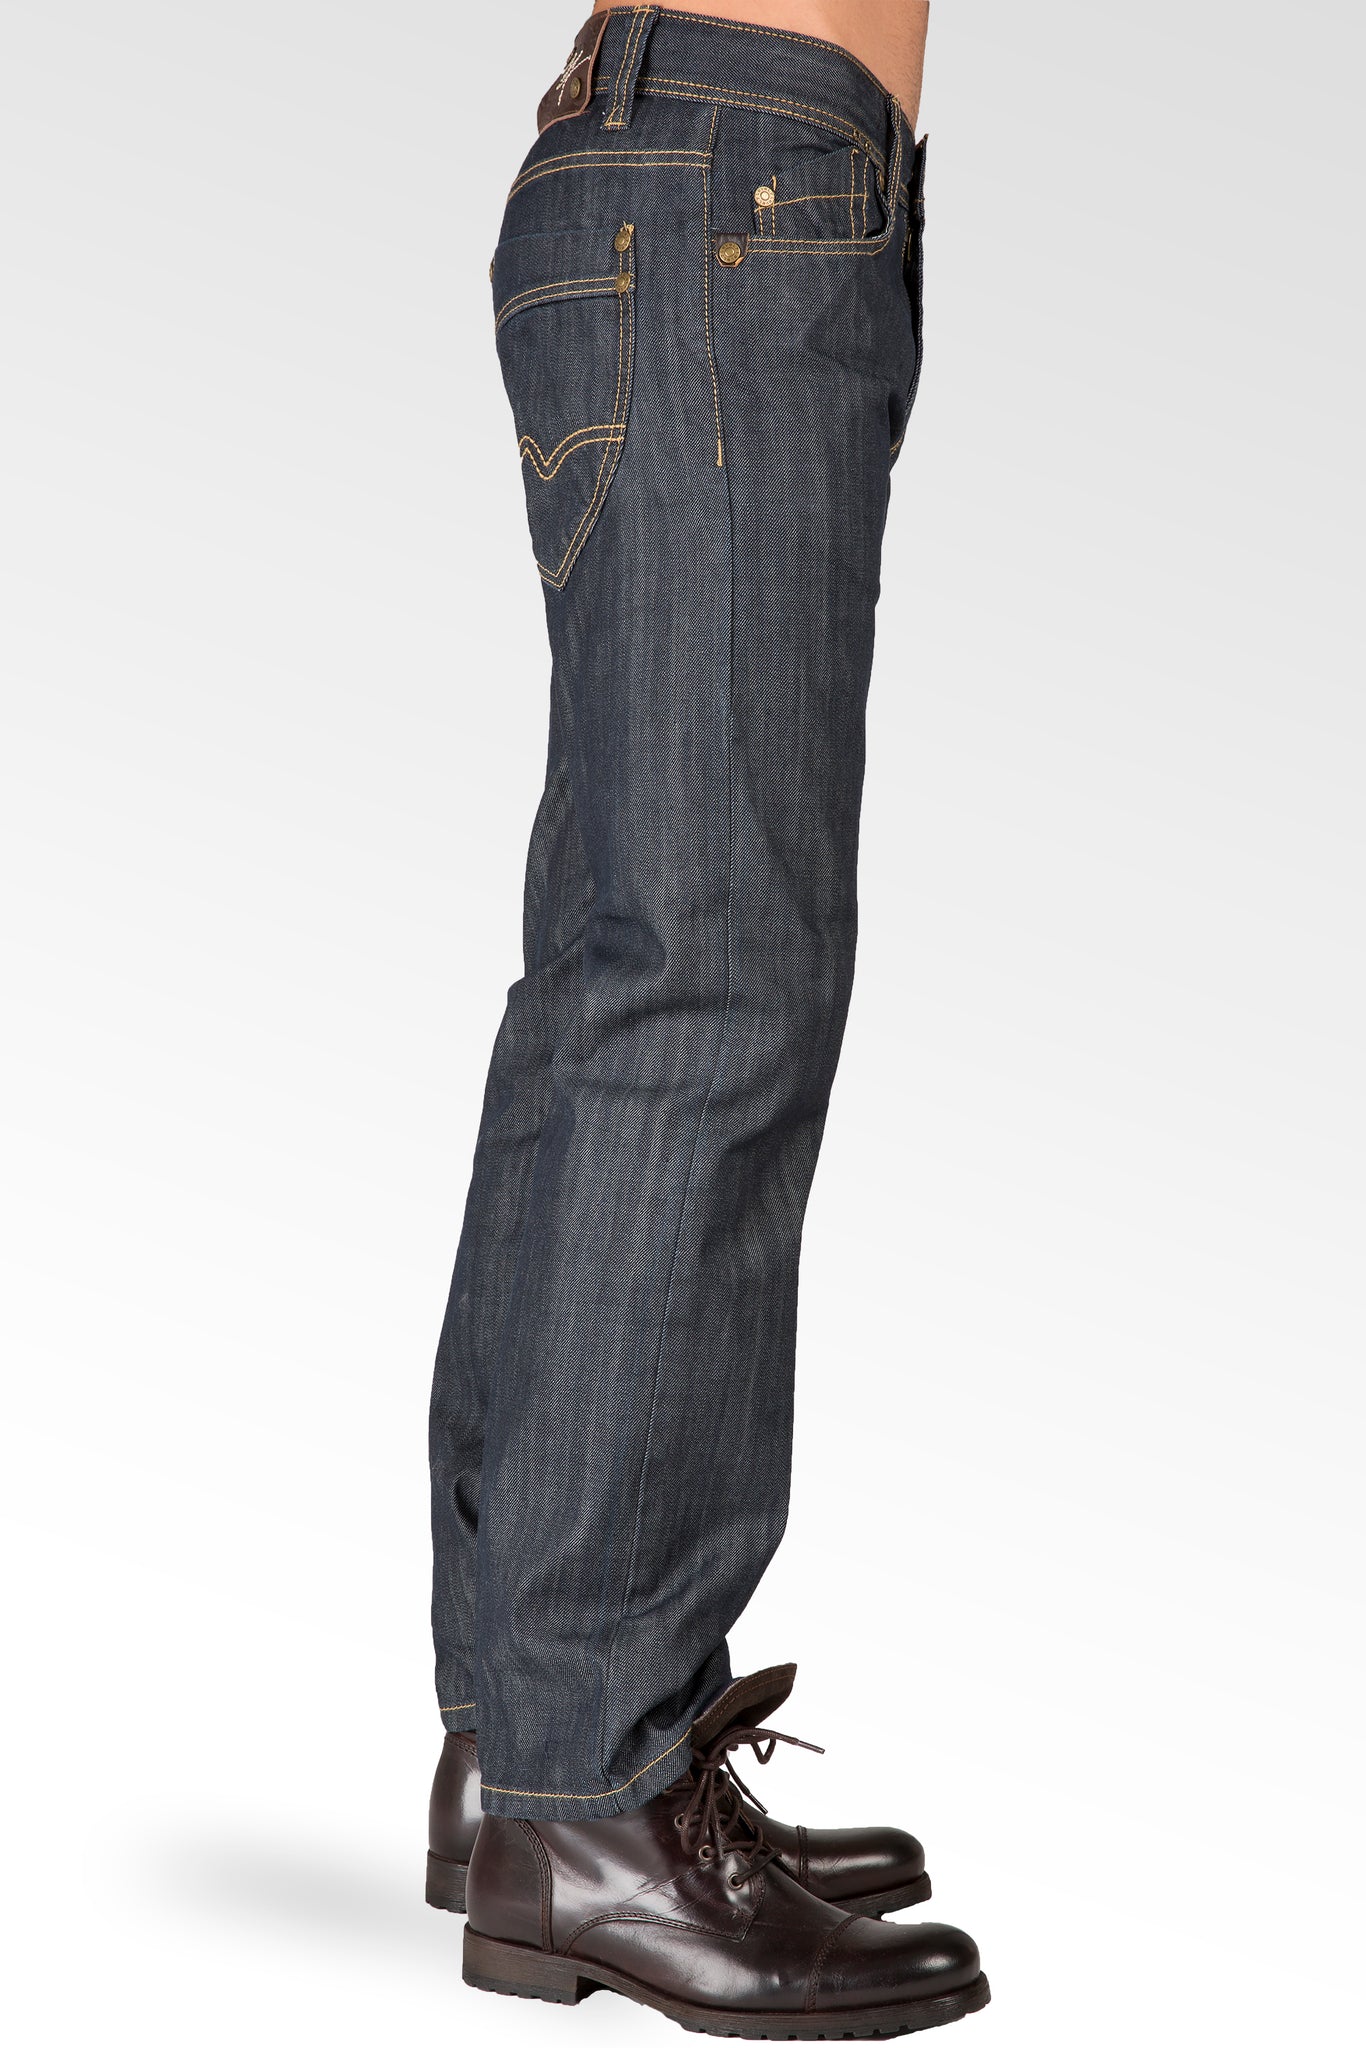 Level 7 Men's Relaxed Straight Coating Indigo 5 Pocket Jeans